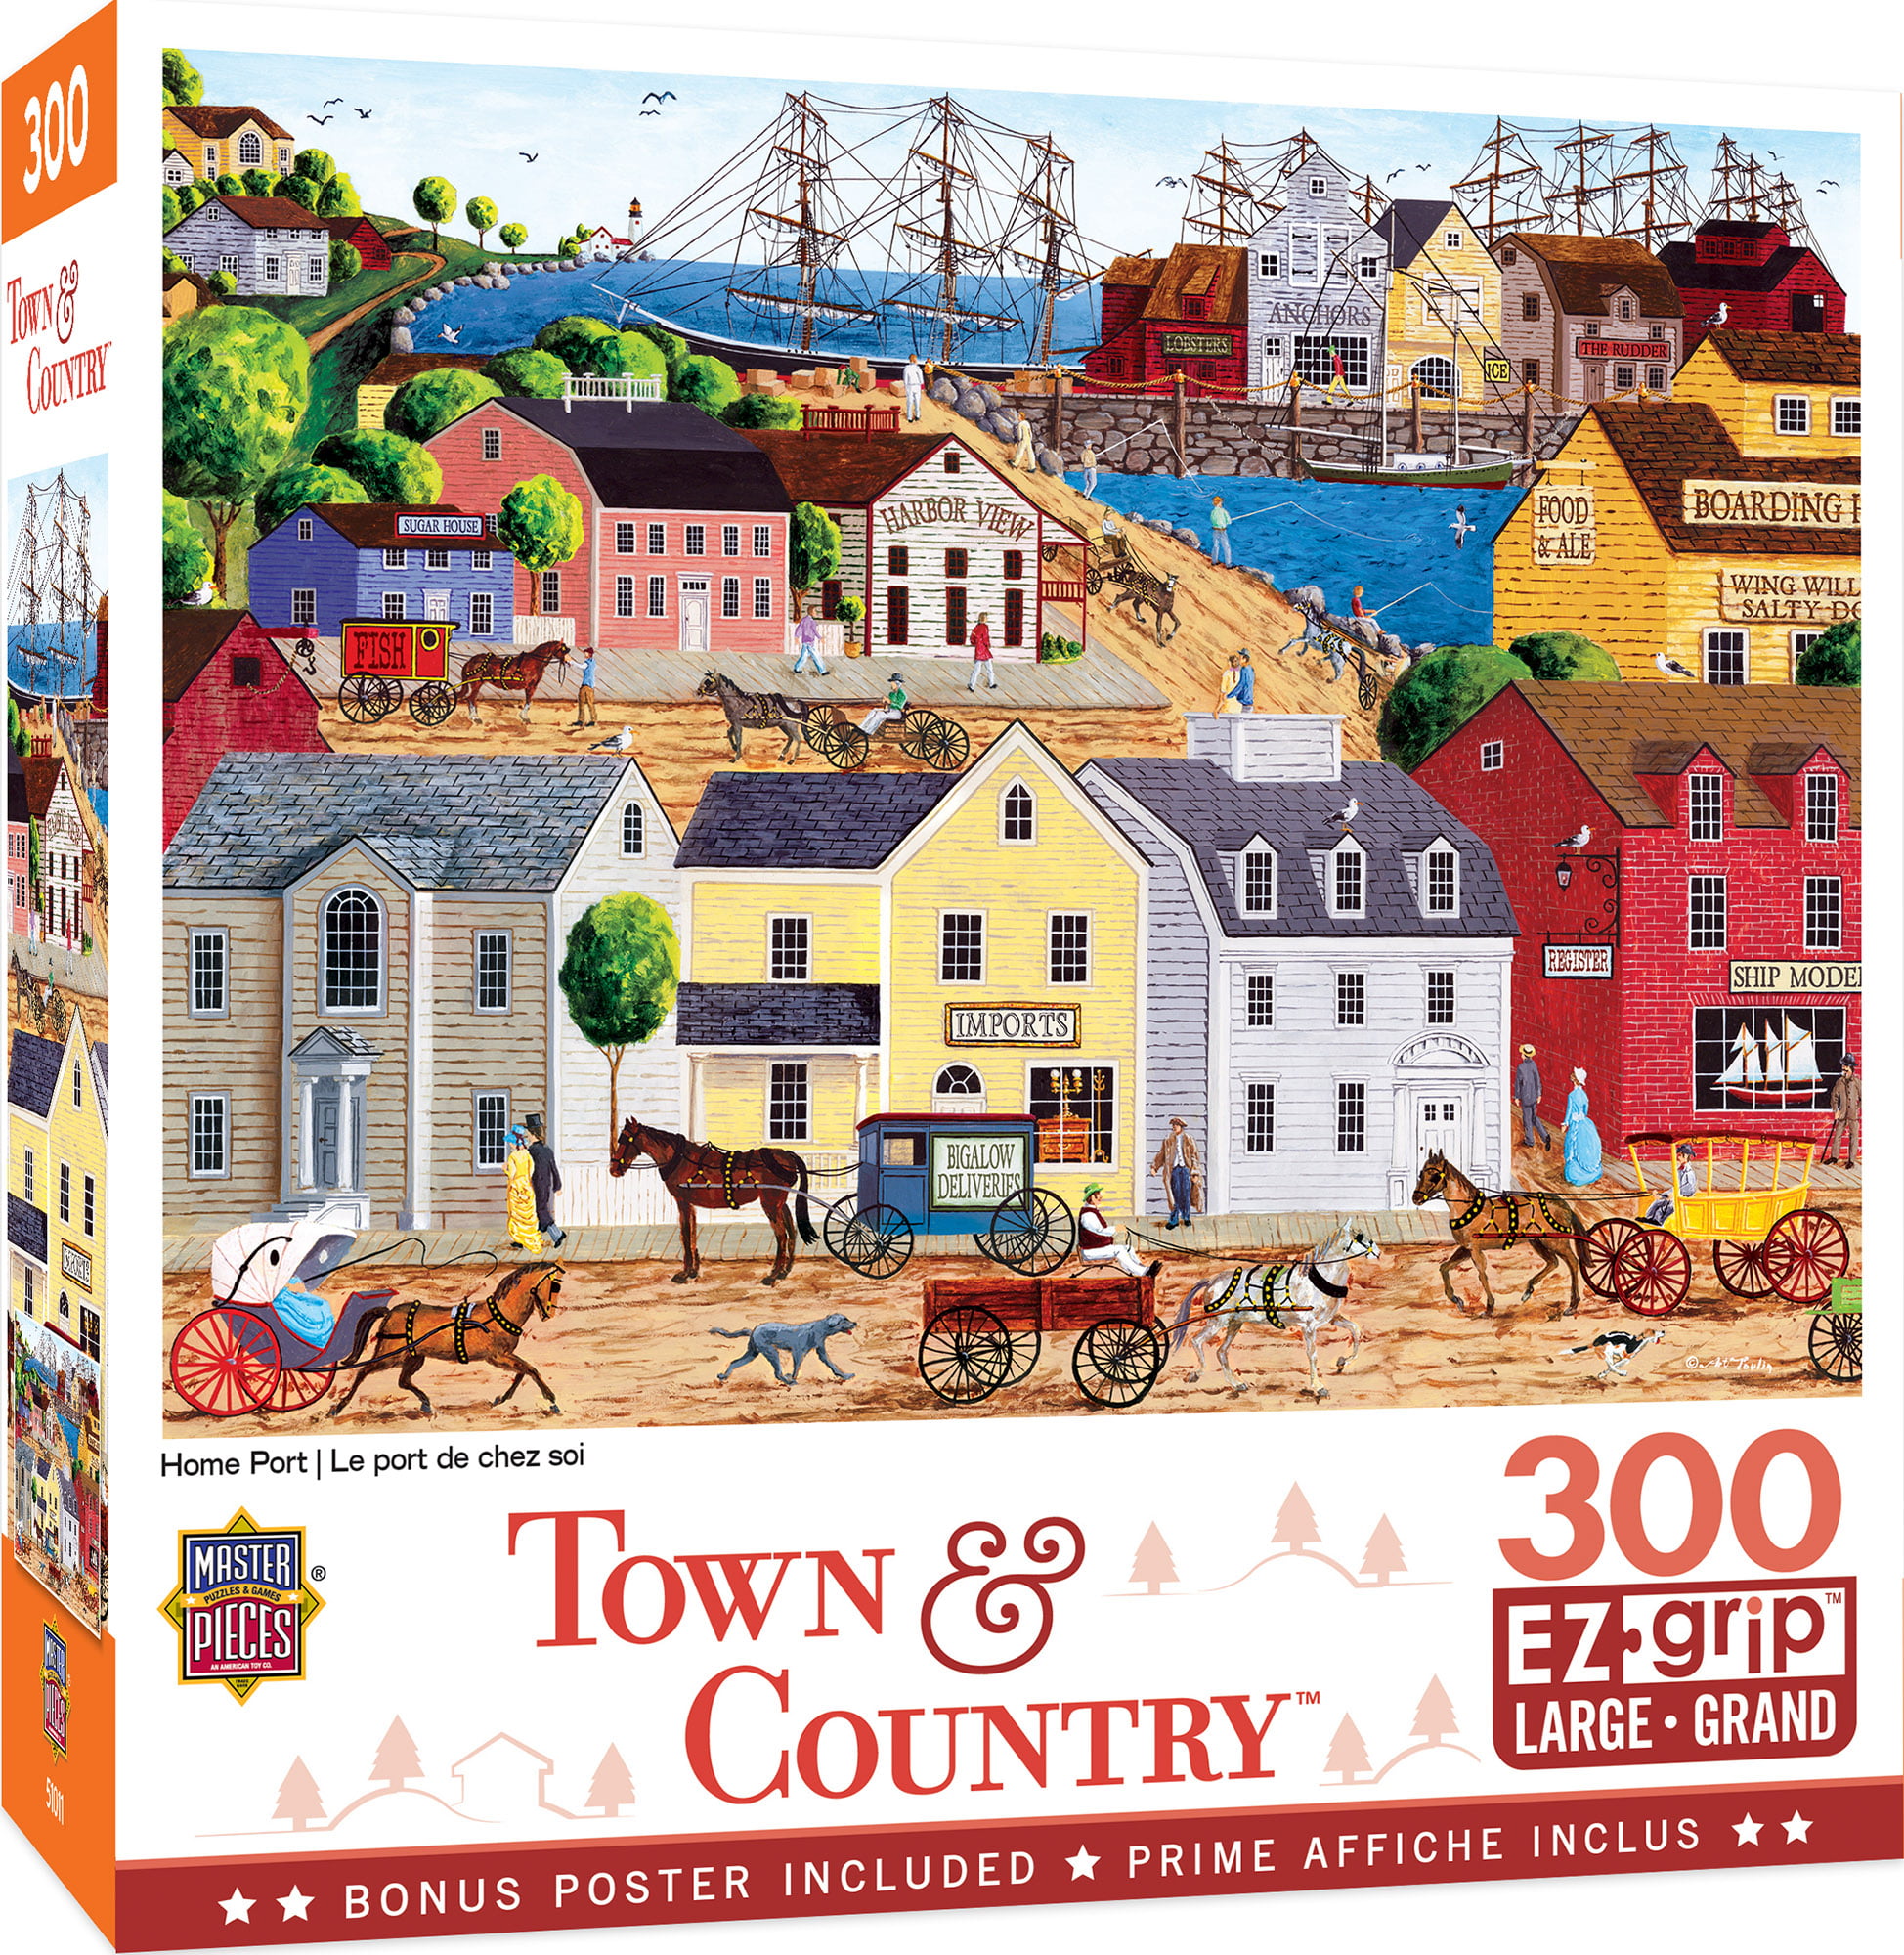 NEW Puzzlebug "Big Red Barn" 500 Piece Jigsaw Puzzle Farm House 